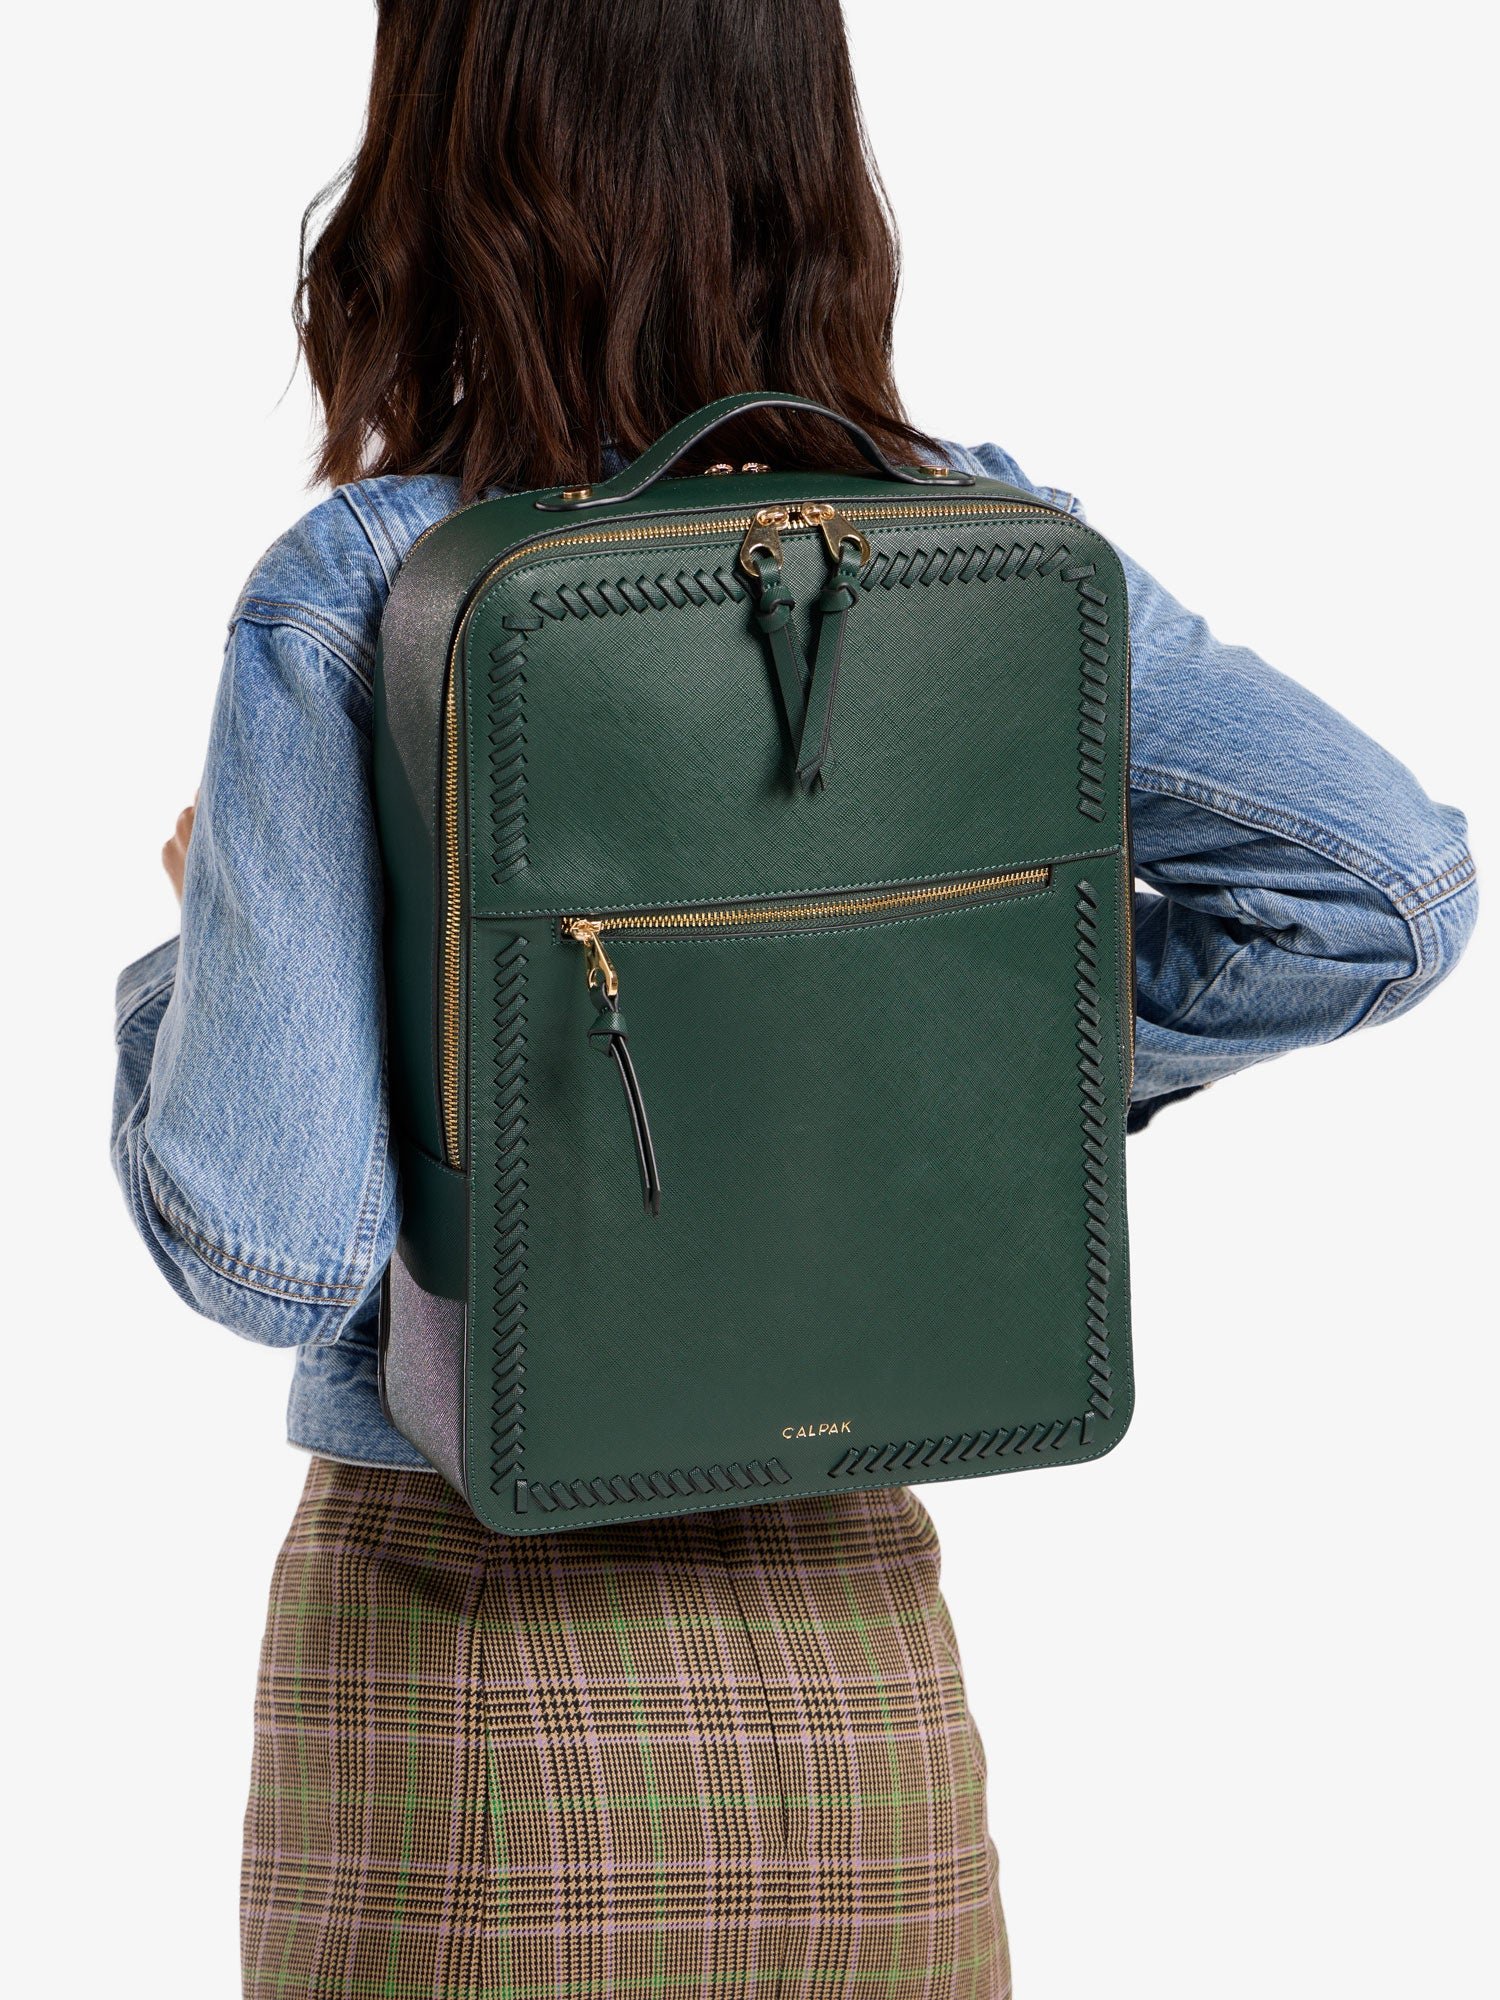 Model wearing dark green CALPAK Kaya 17 inch Laptop Backpack